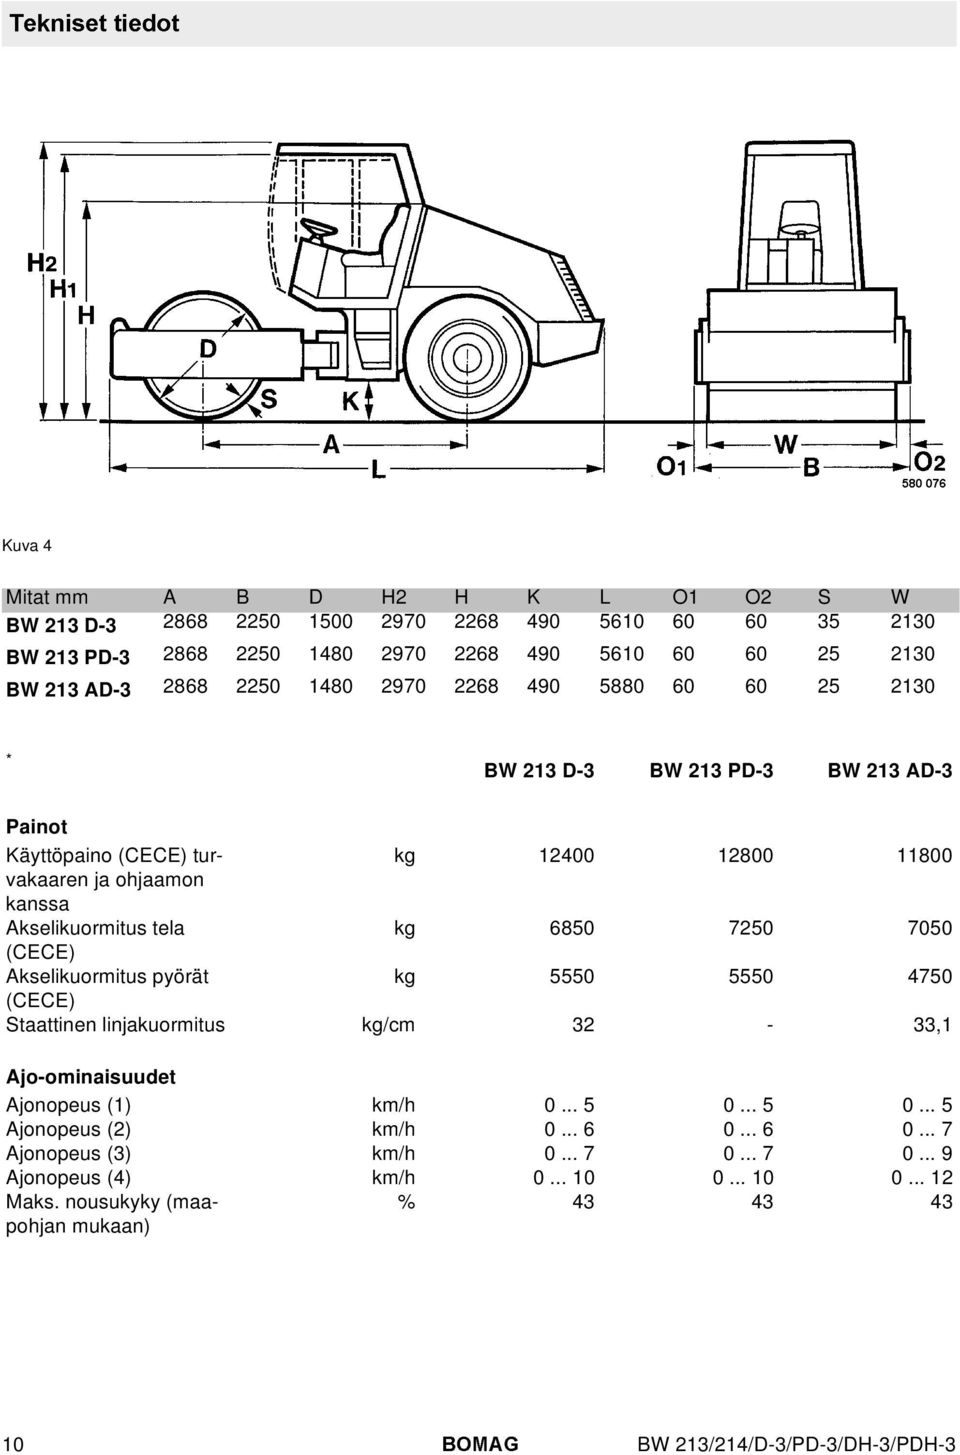 Akselikuormitus tela kg 6850 7250 7050 (CECE) Akselikuormitus pyörät kg 5550 5550 4750 (CECE) Staattinen linjakuormitus kg/cm 32-33,1 Ajo-ominaisuudet Ajonopeus (1) km/h 0... 5 0.